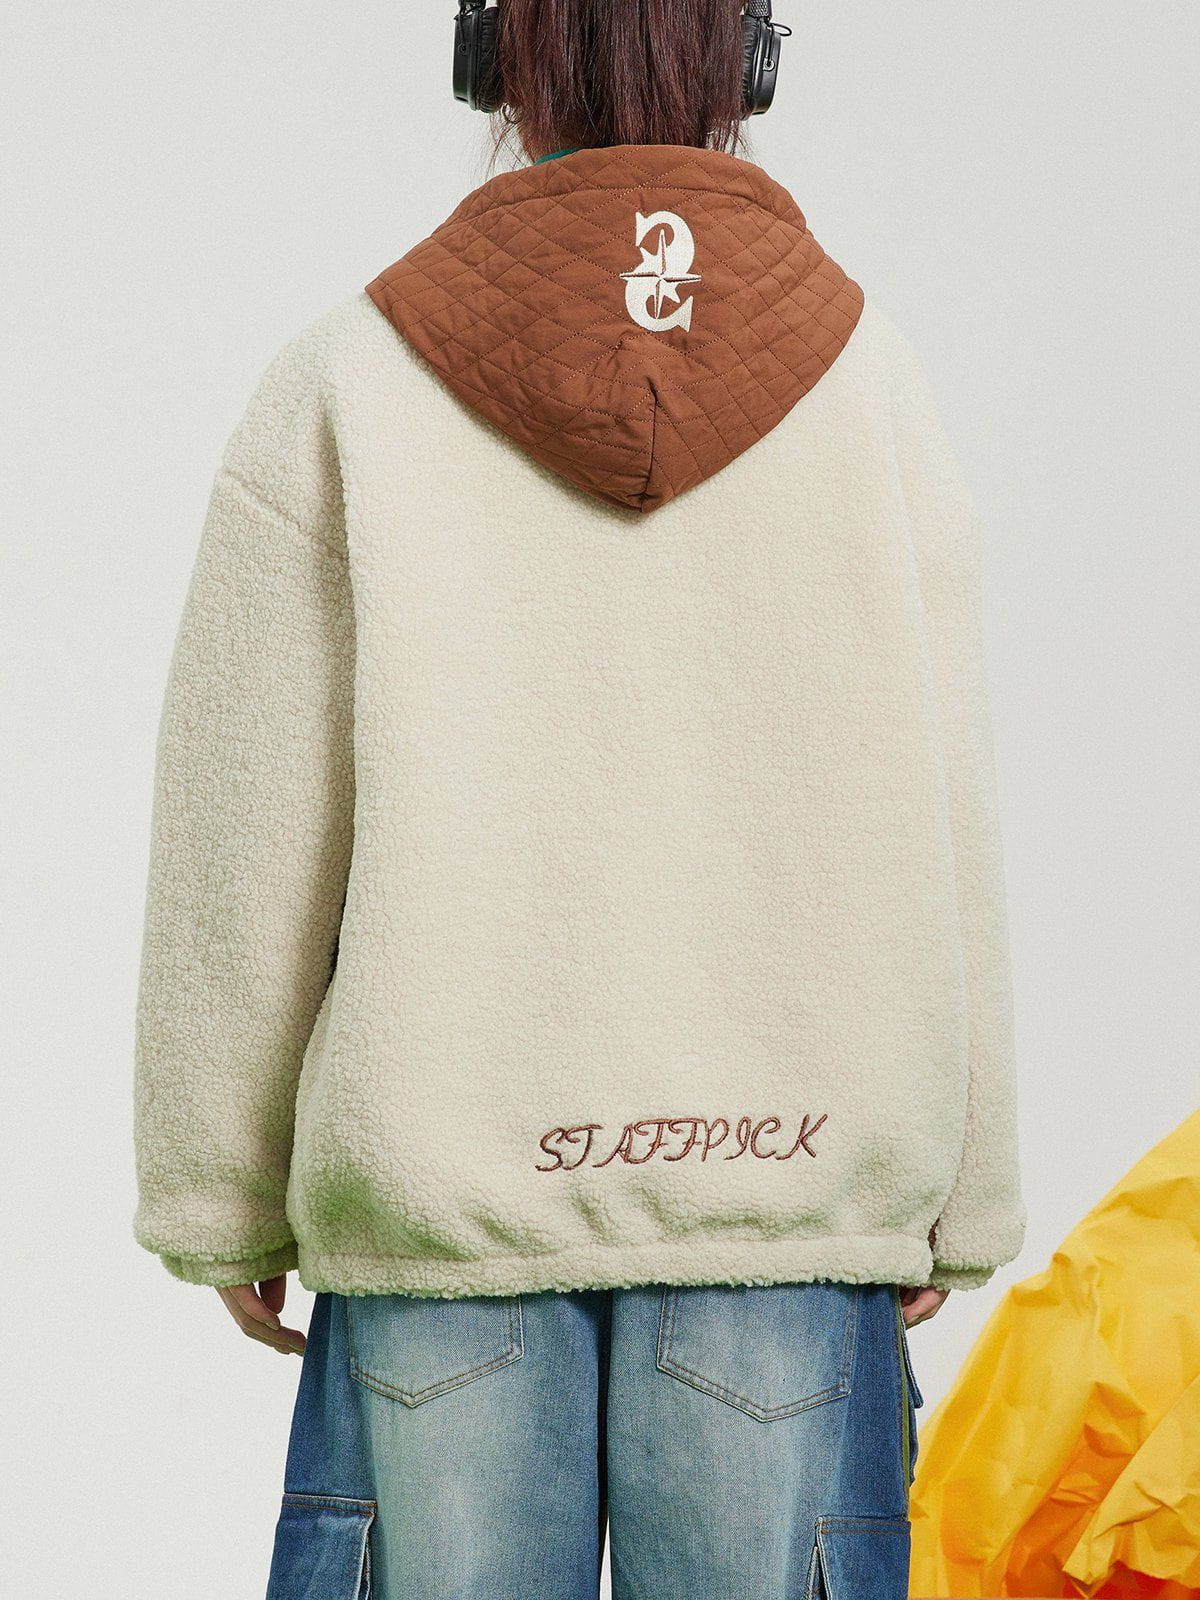 LUXENFY™ - Staffpick Hooded Sherpa Coat luxenfy.com